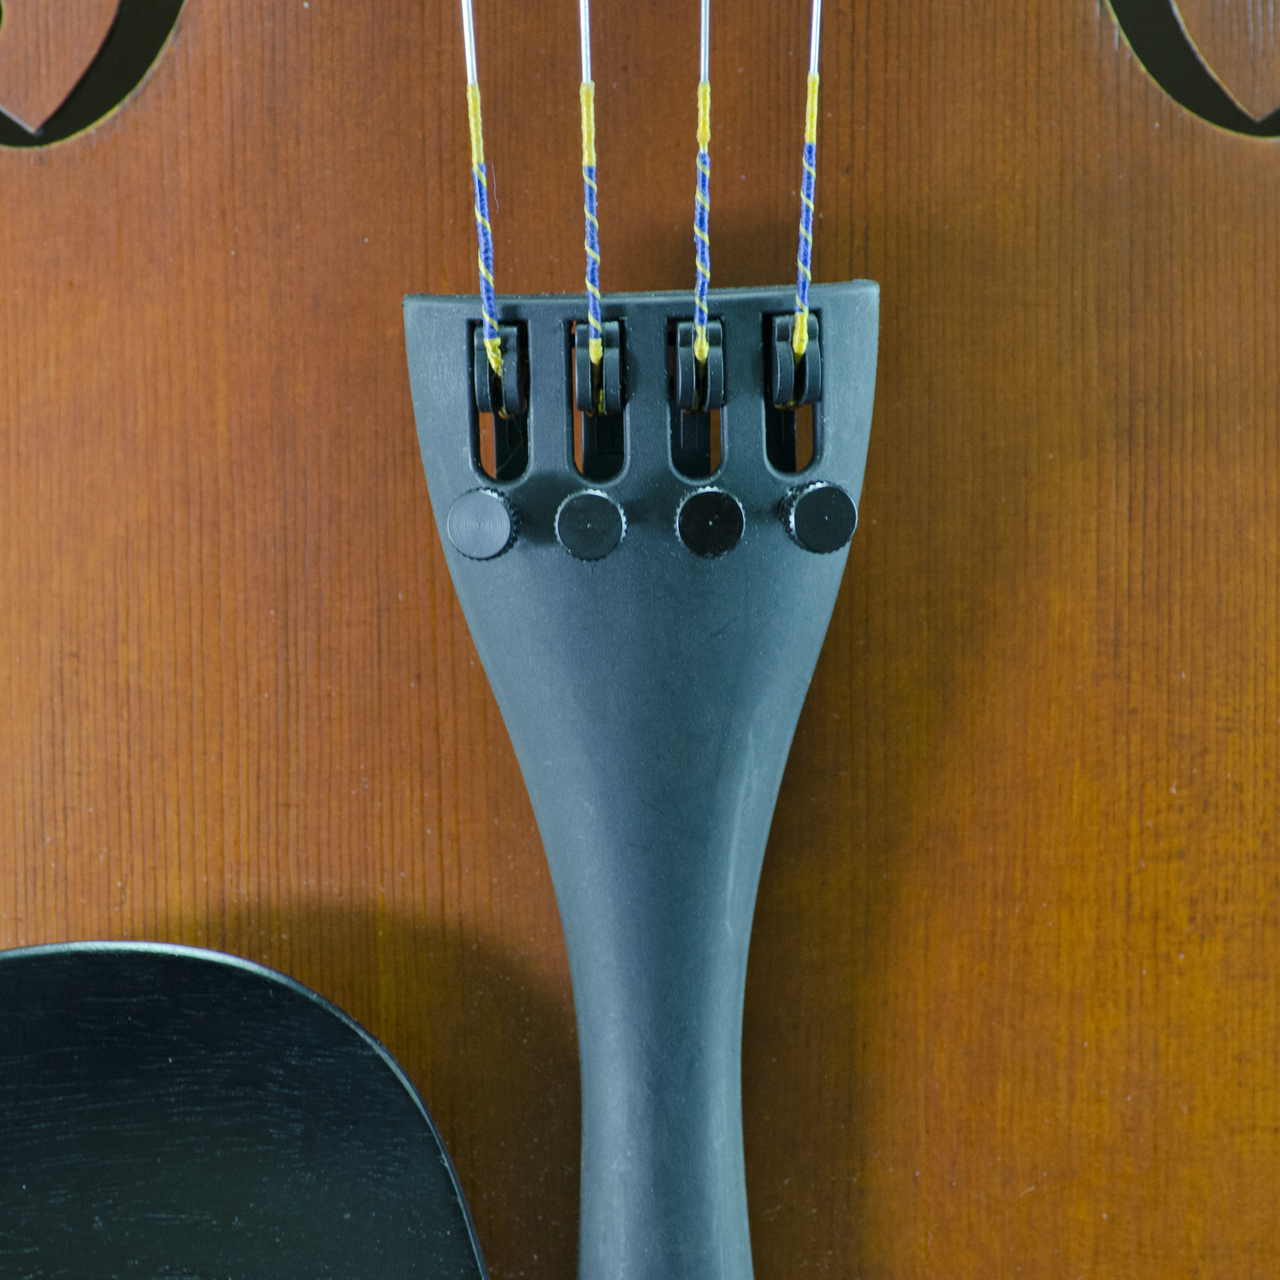 D'Addario Kaplan Vivo Viola String Set in action